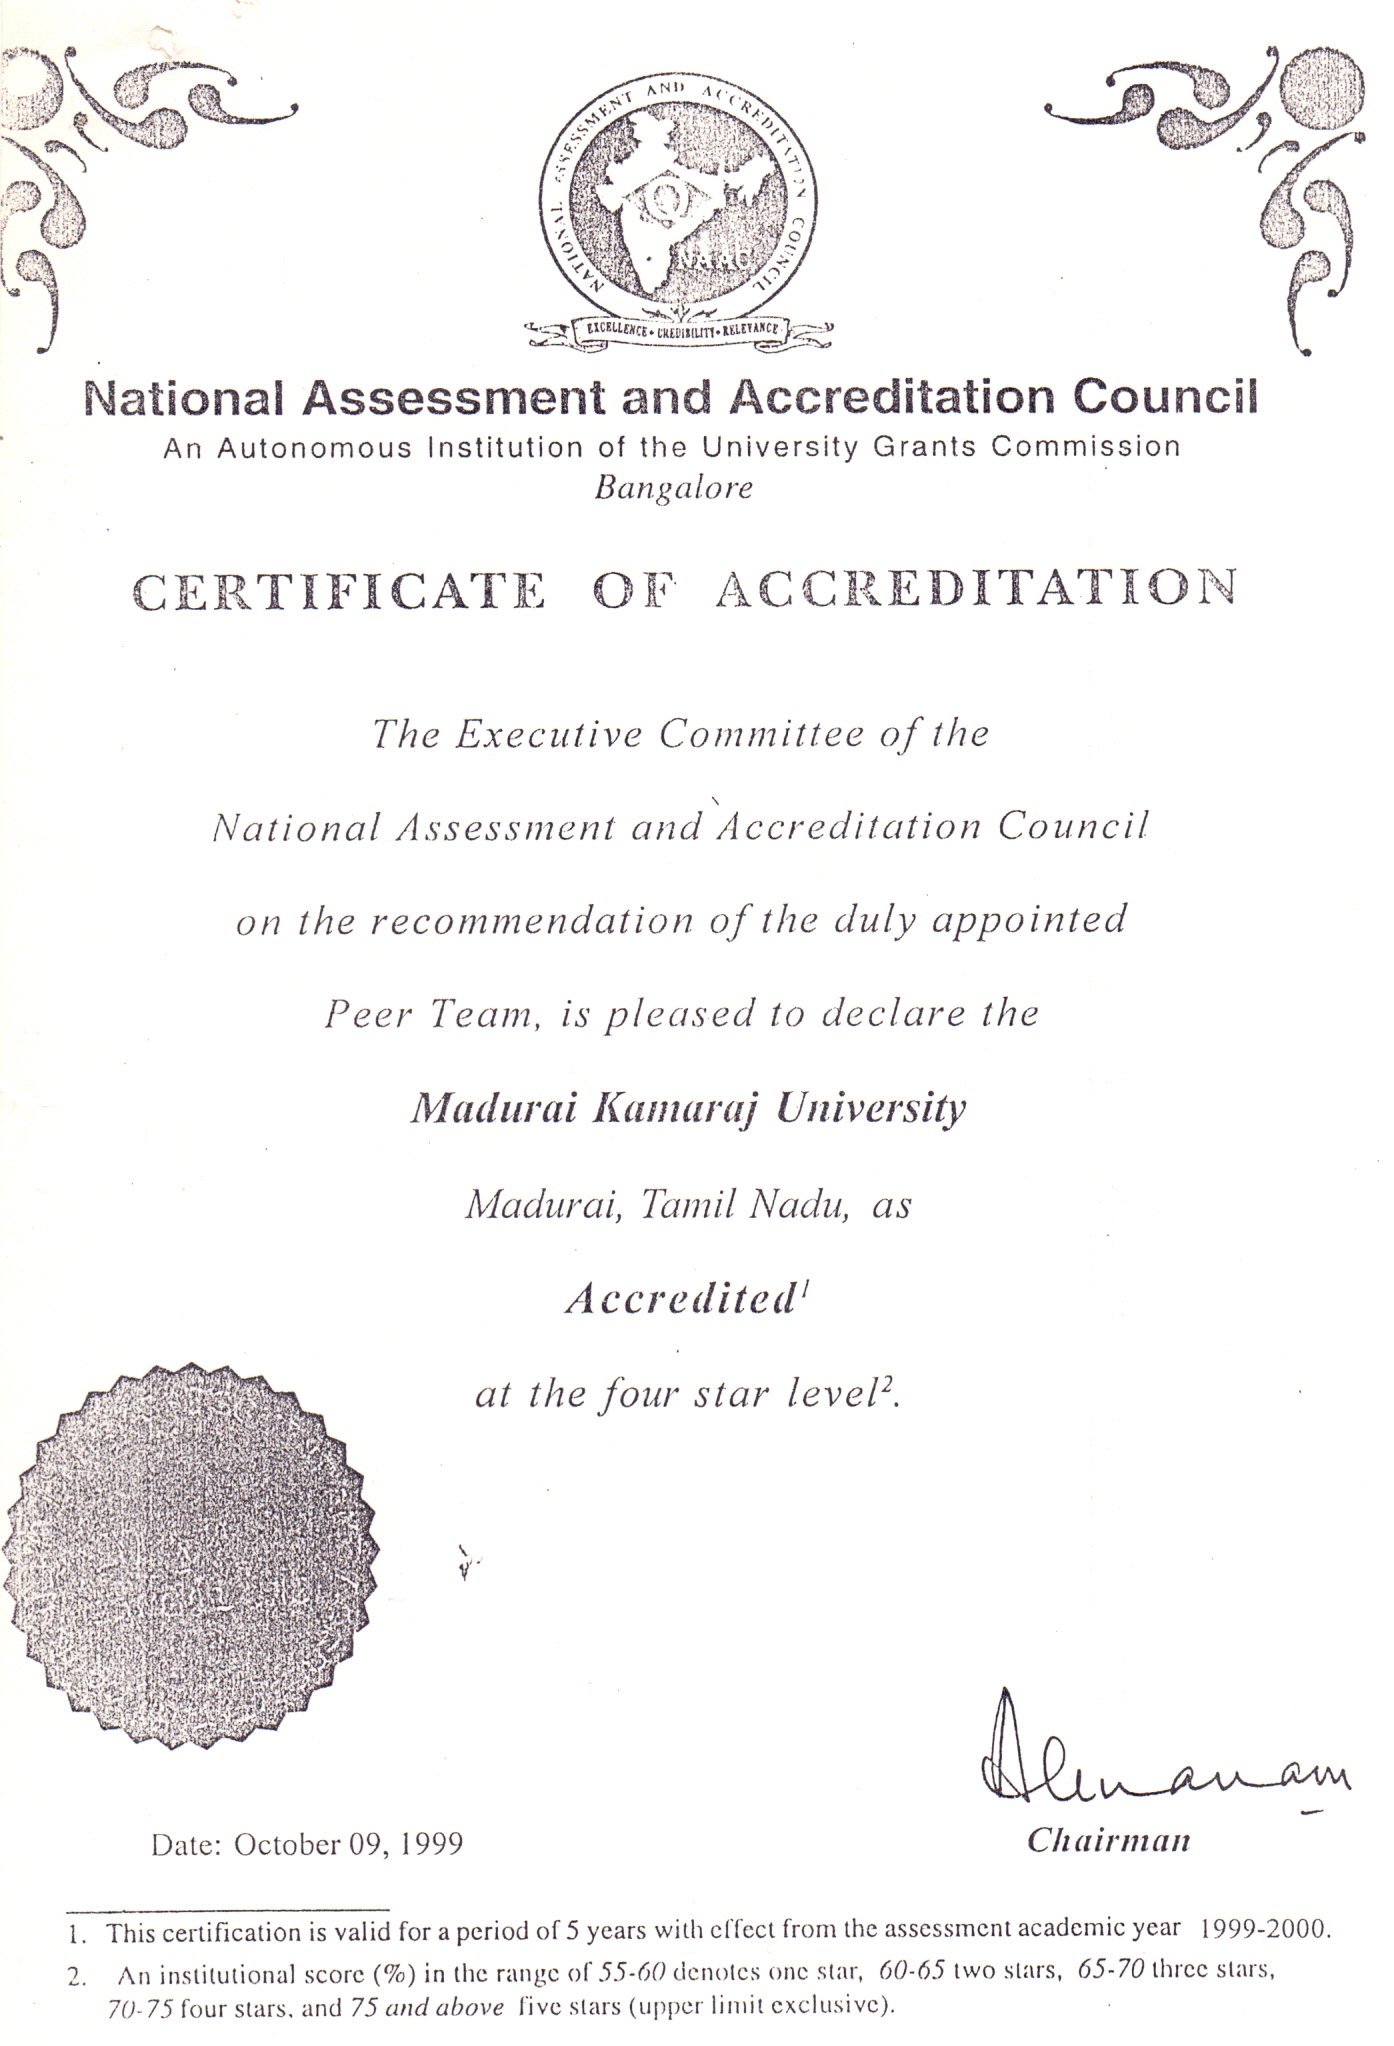 NAAC-1999